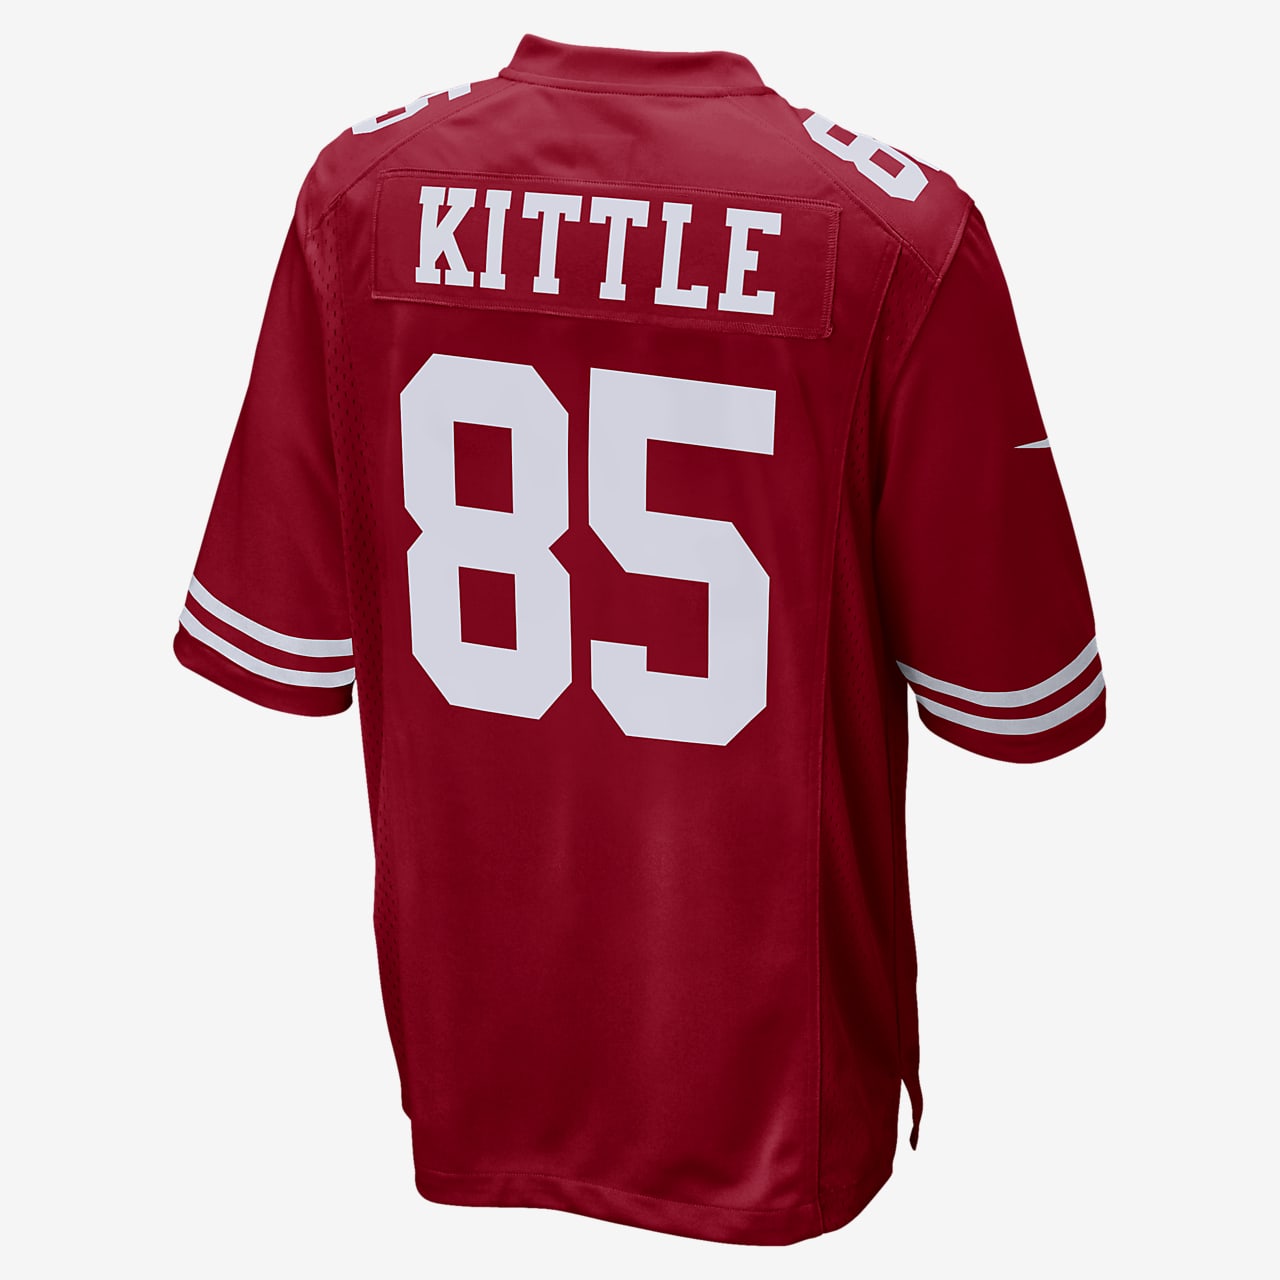 san francisco 49ers kittle jersey